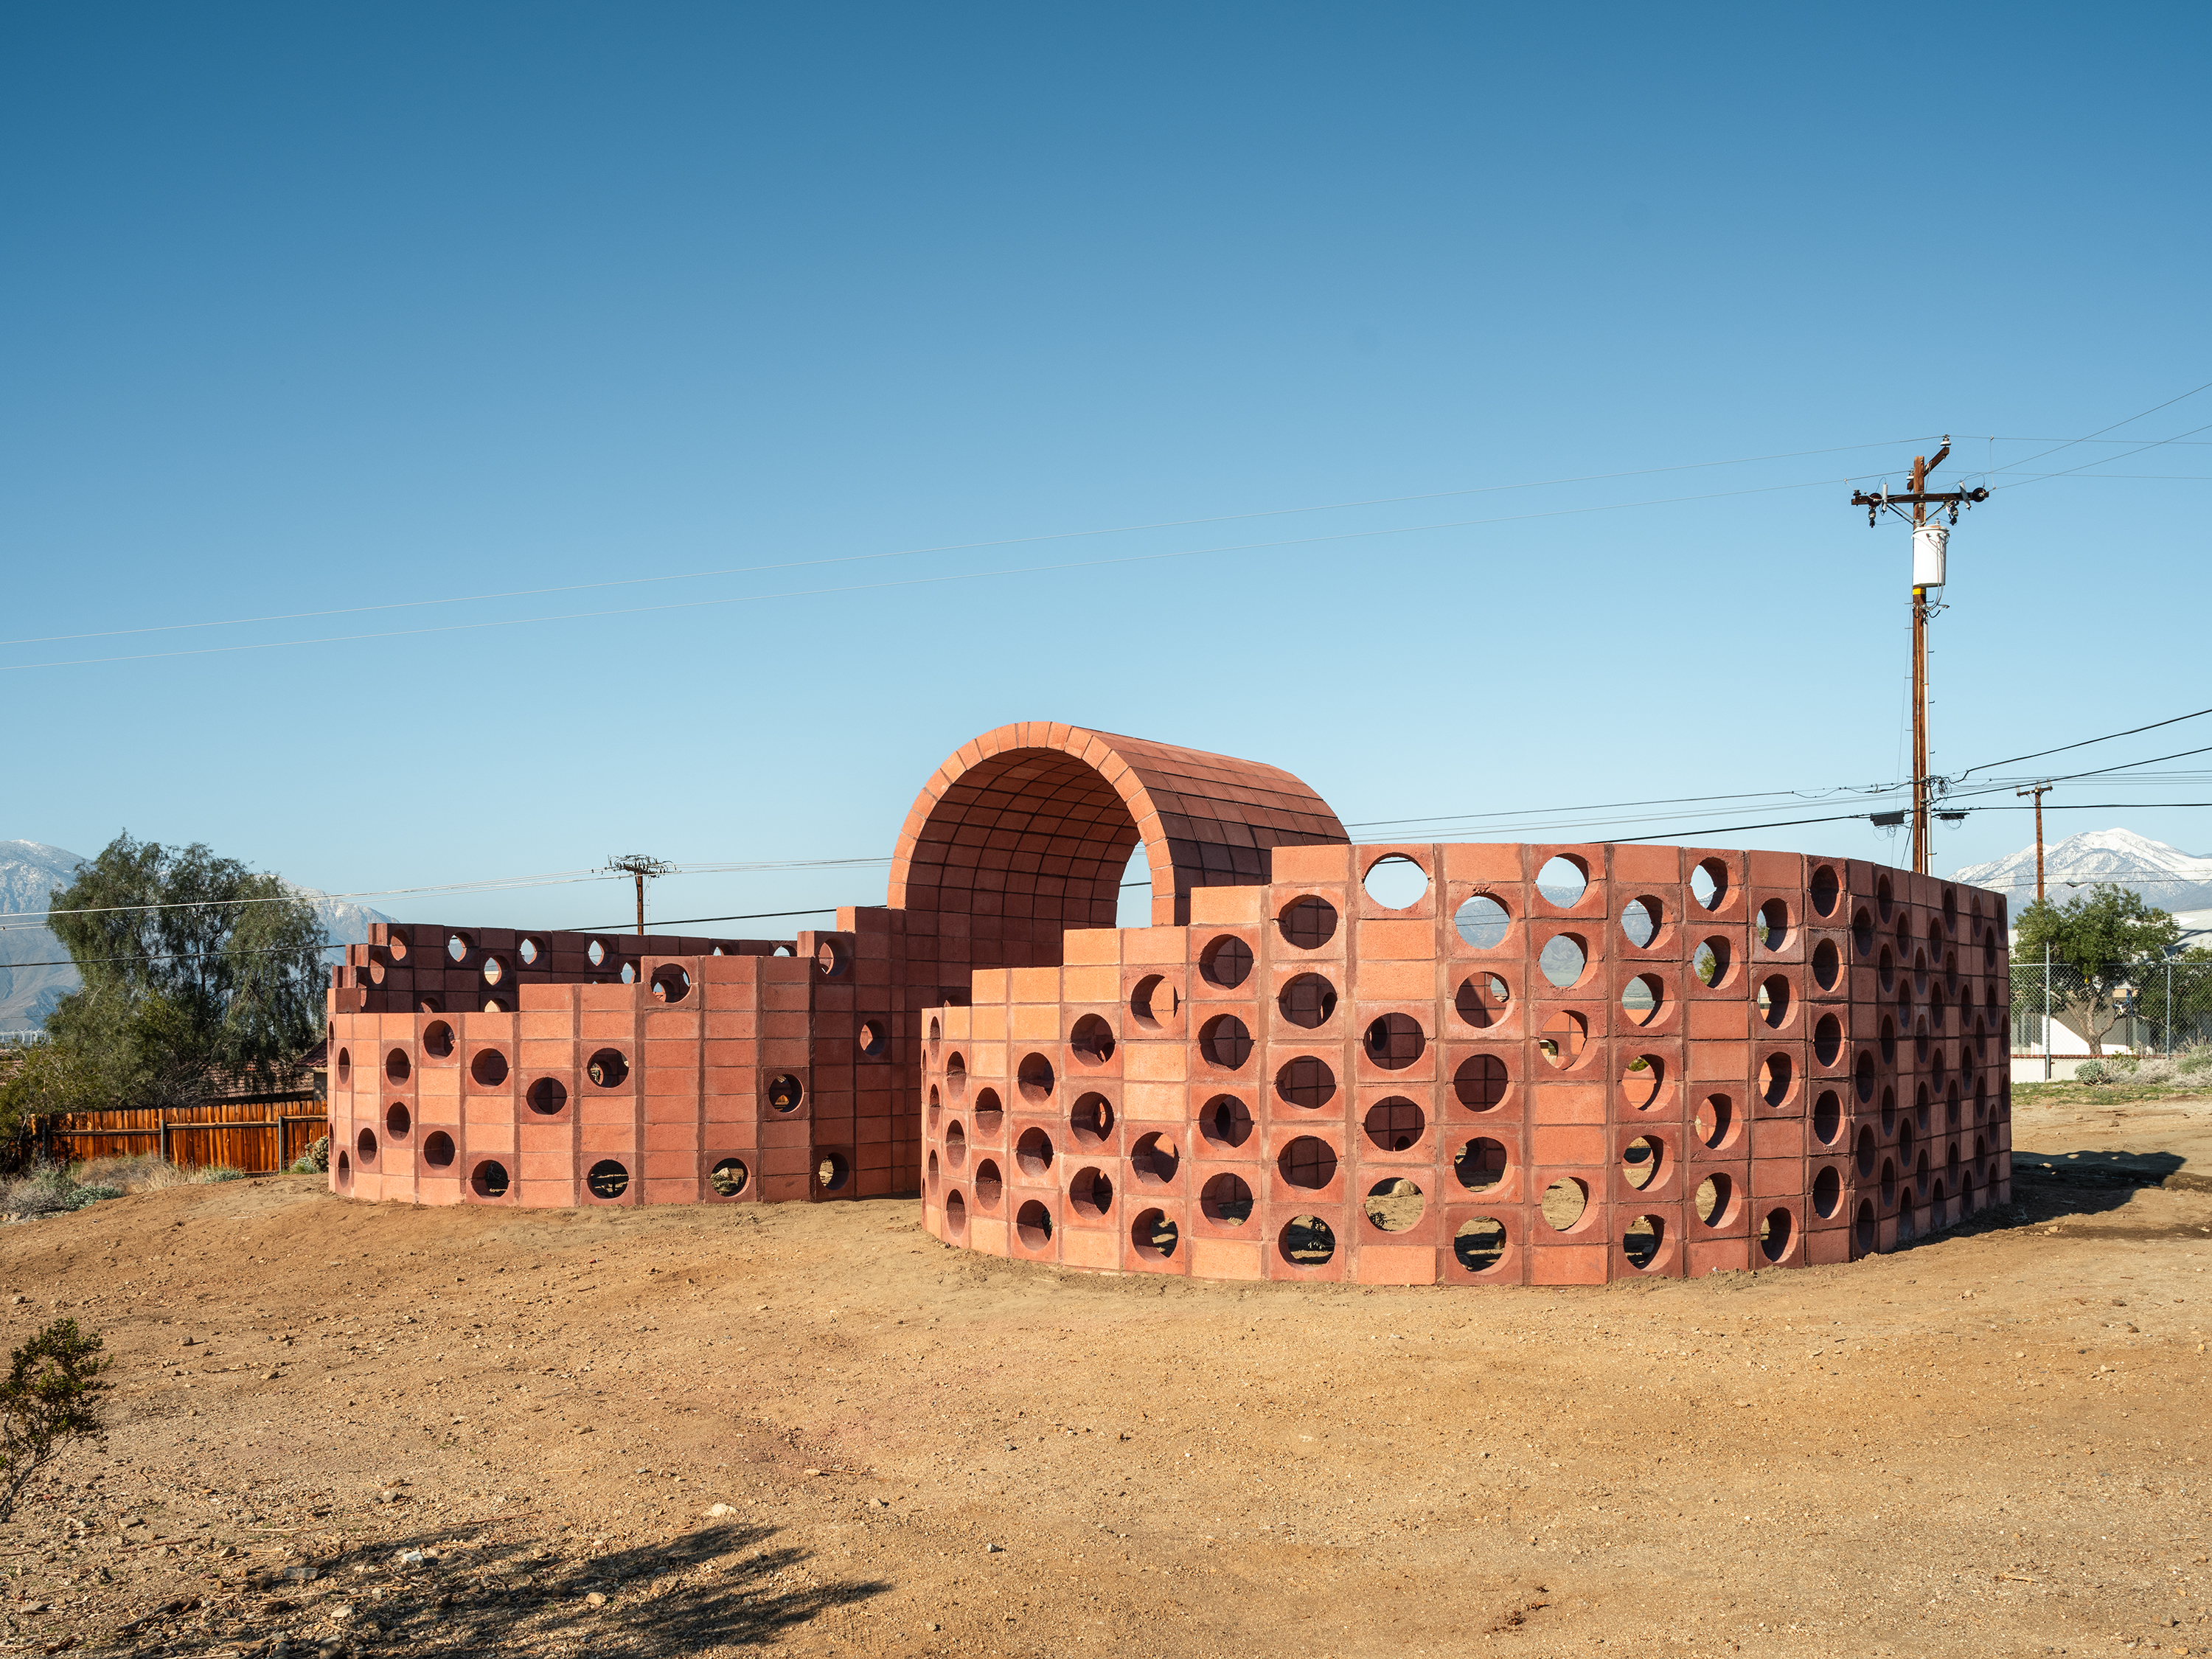 A brick-colored art installation in the desert